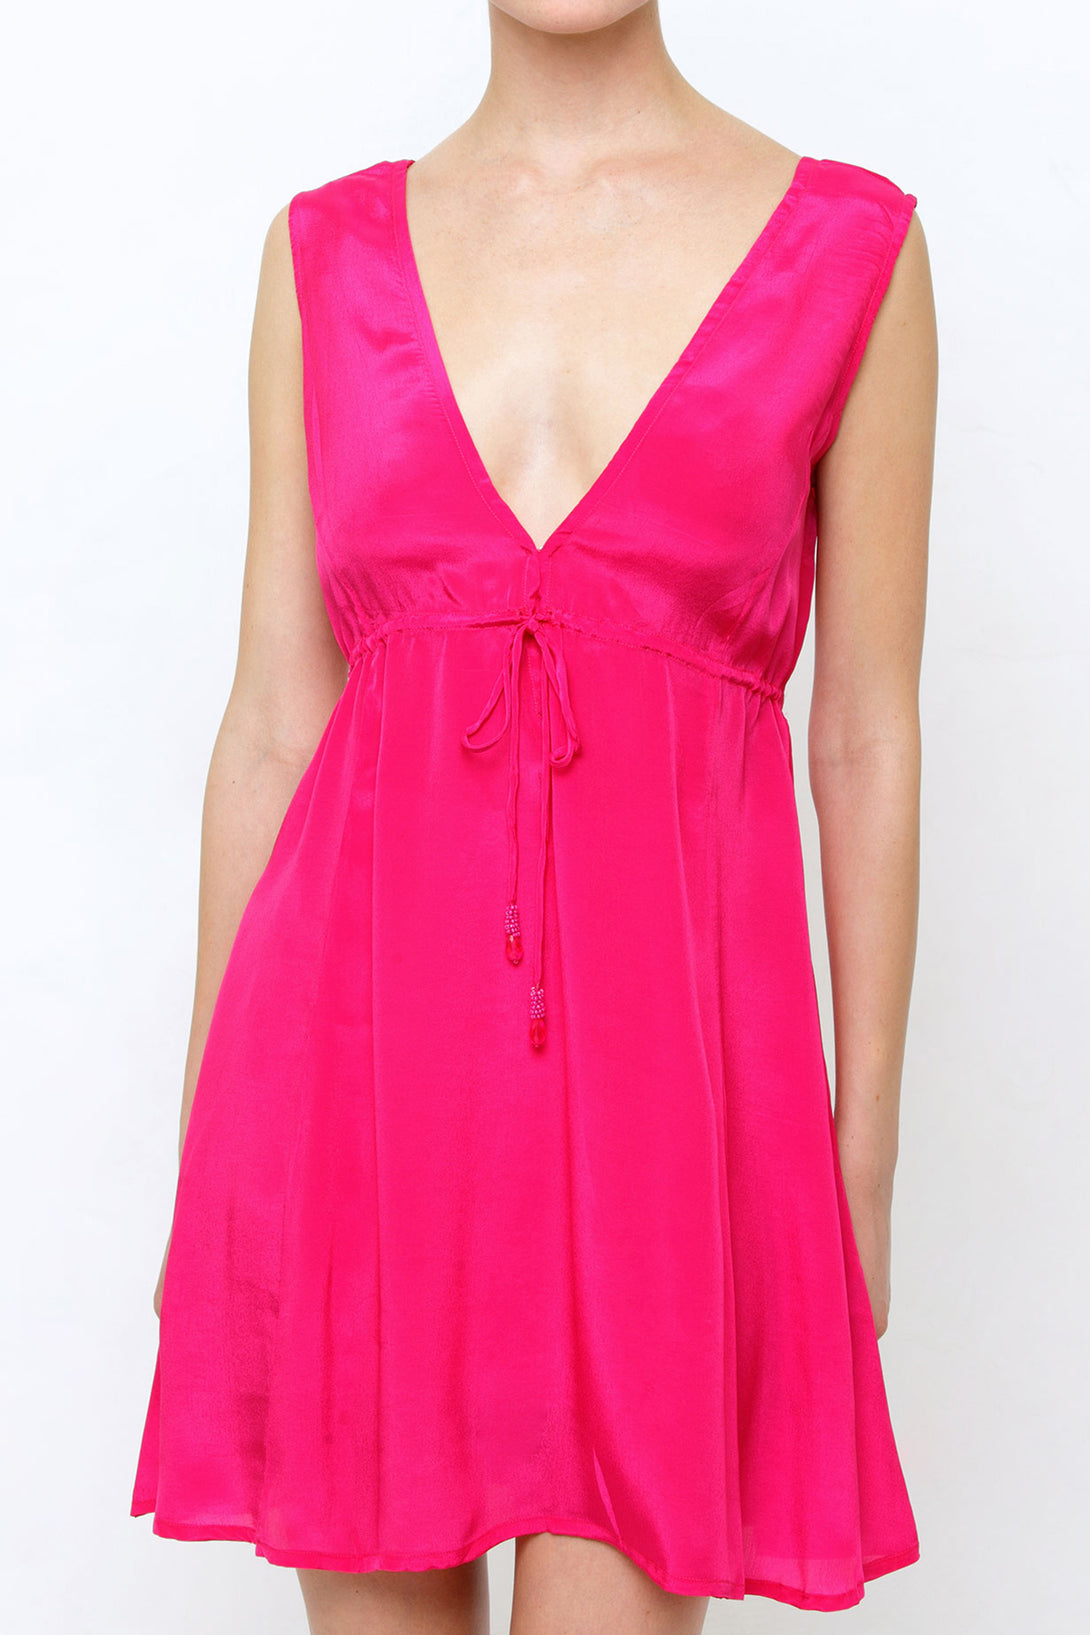  light pink mini dress, short sleeveless summer dresses,Shahida Parides, mini frock for women,